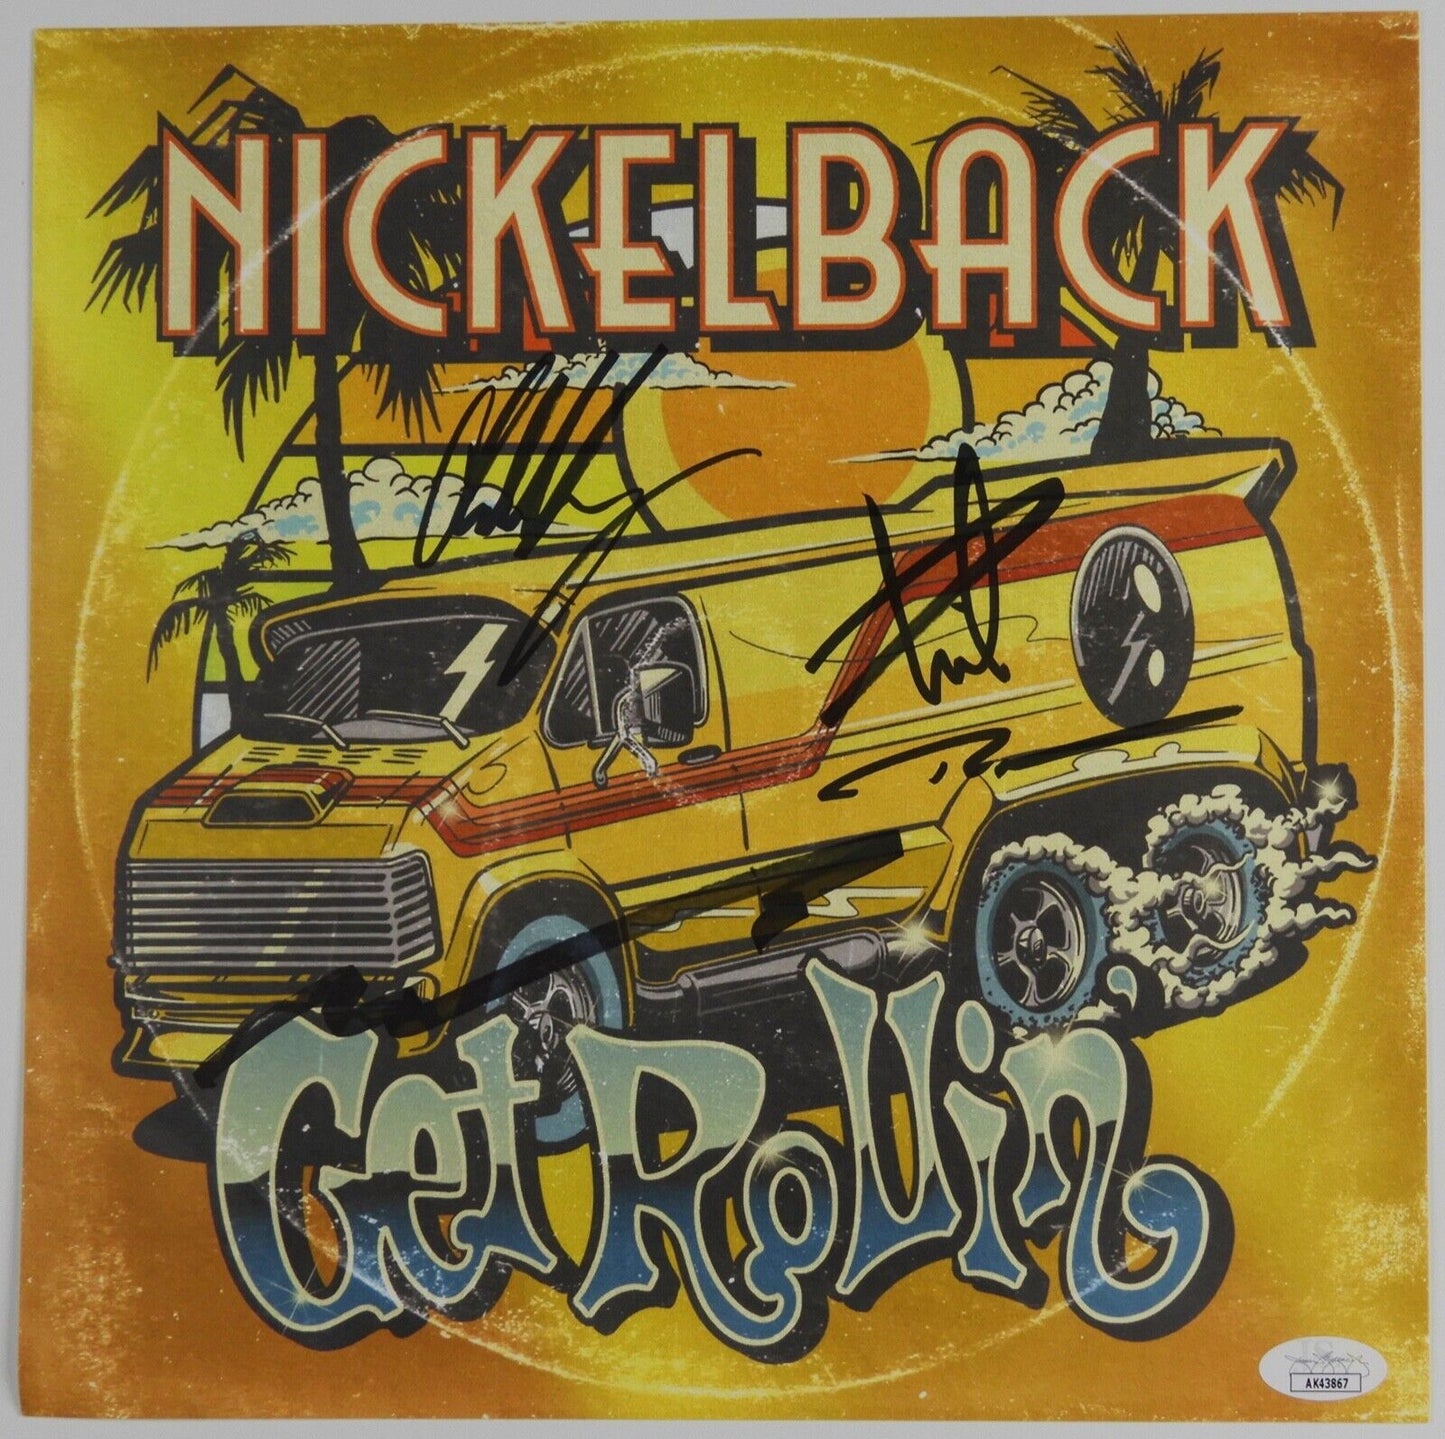 Nickelback JSA Fully Signed Autograph Album Insert Get Rollin'